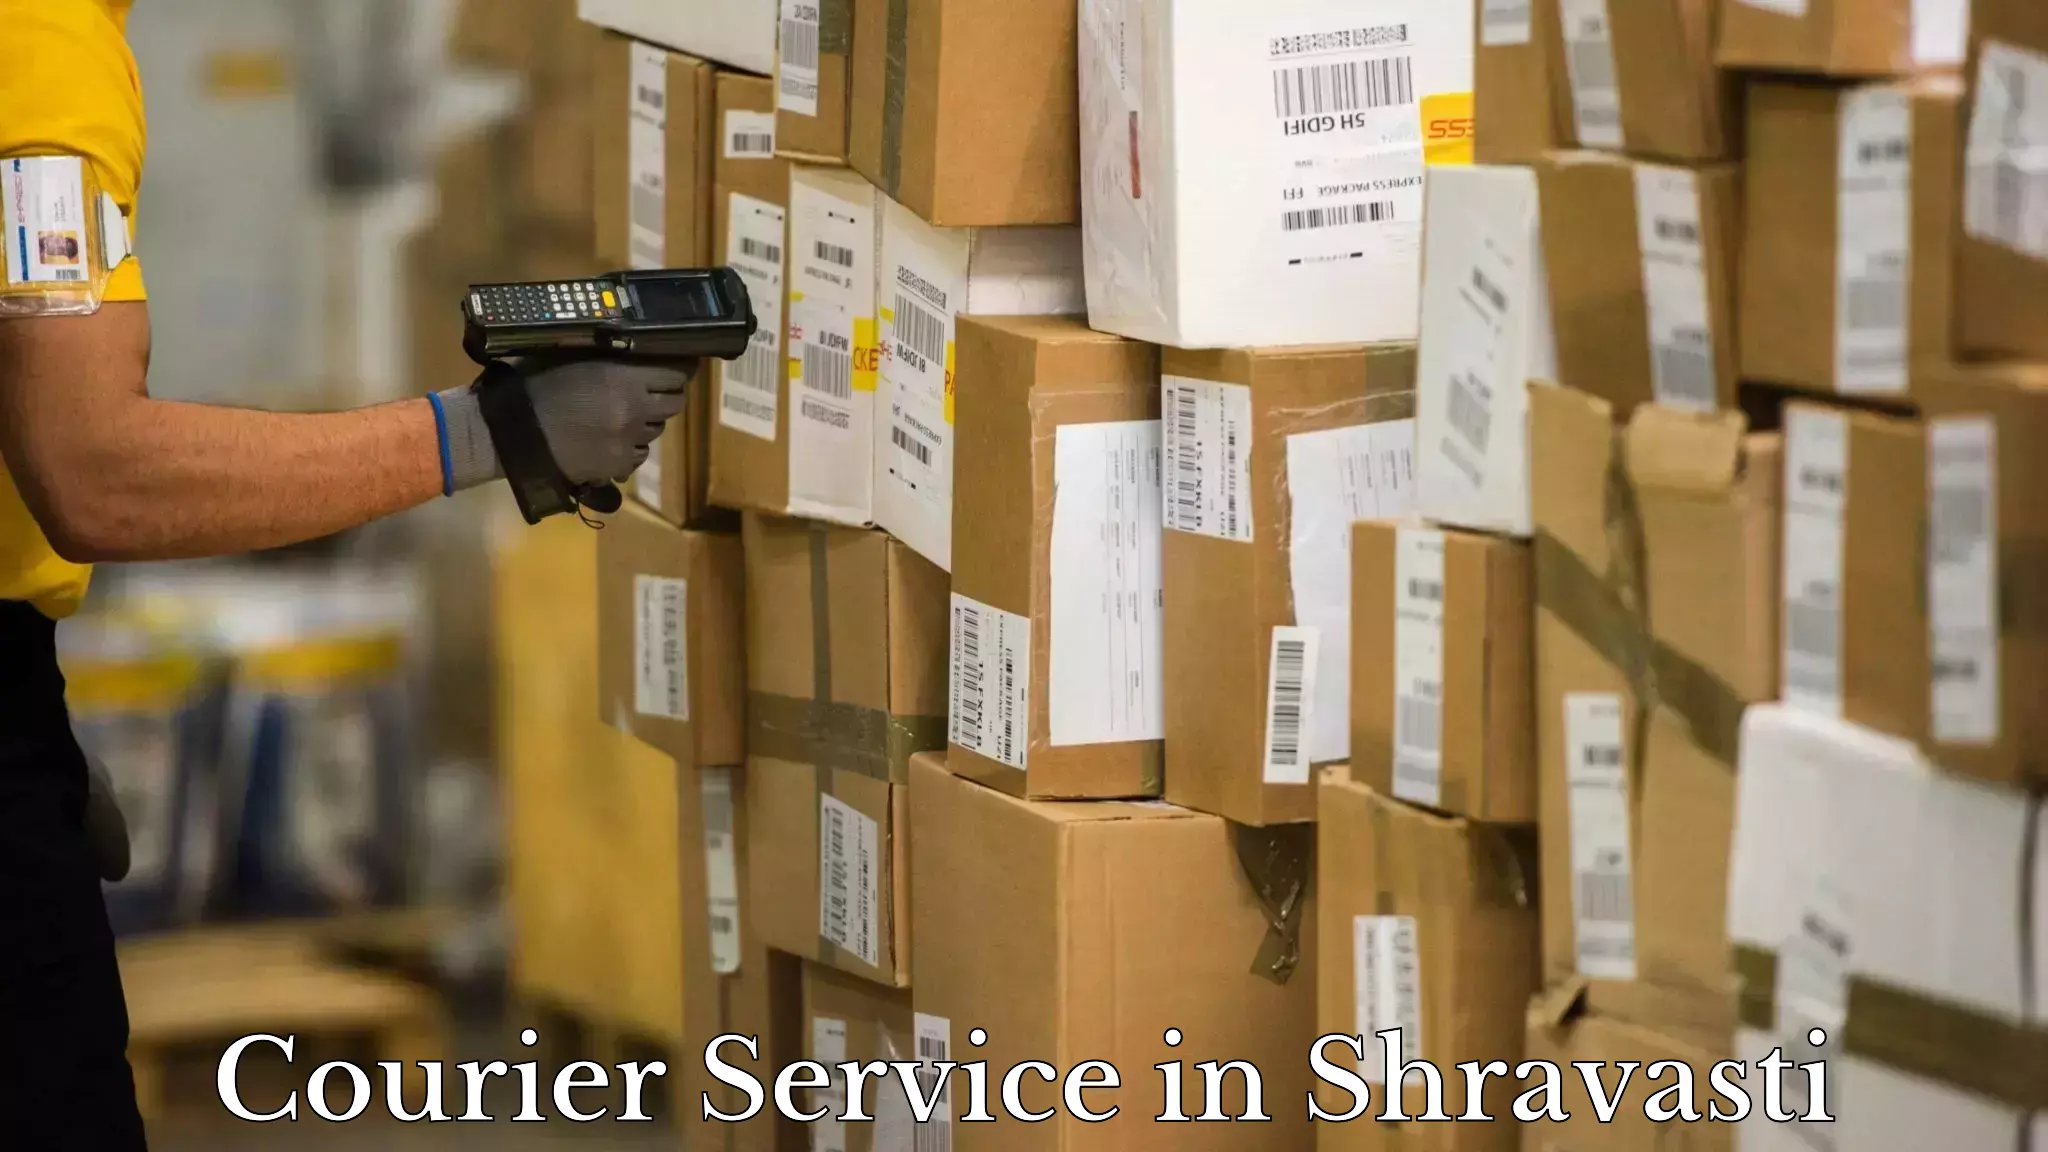 Courier service efficiency in Shravasti